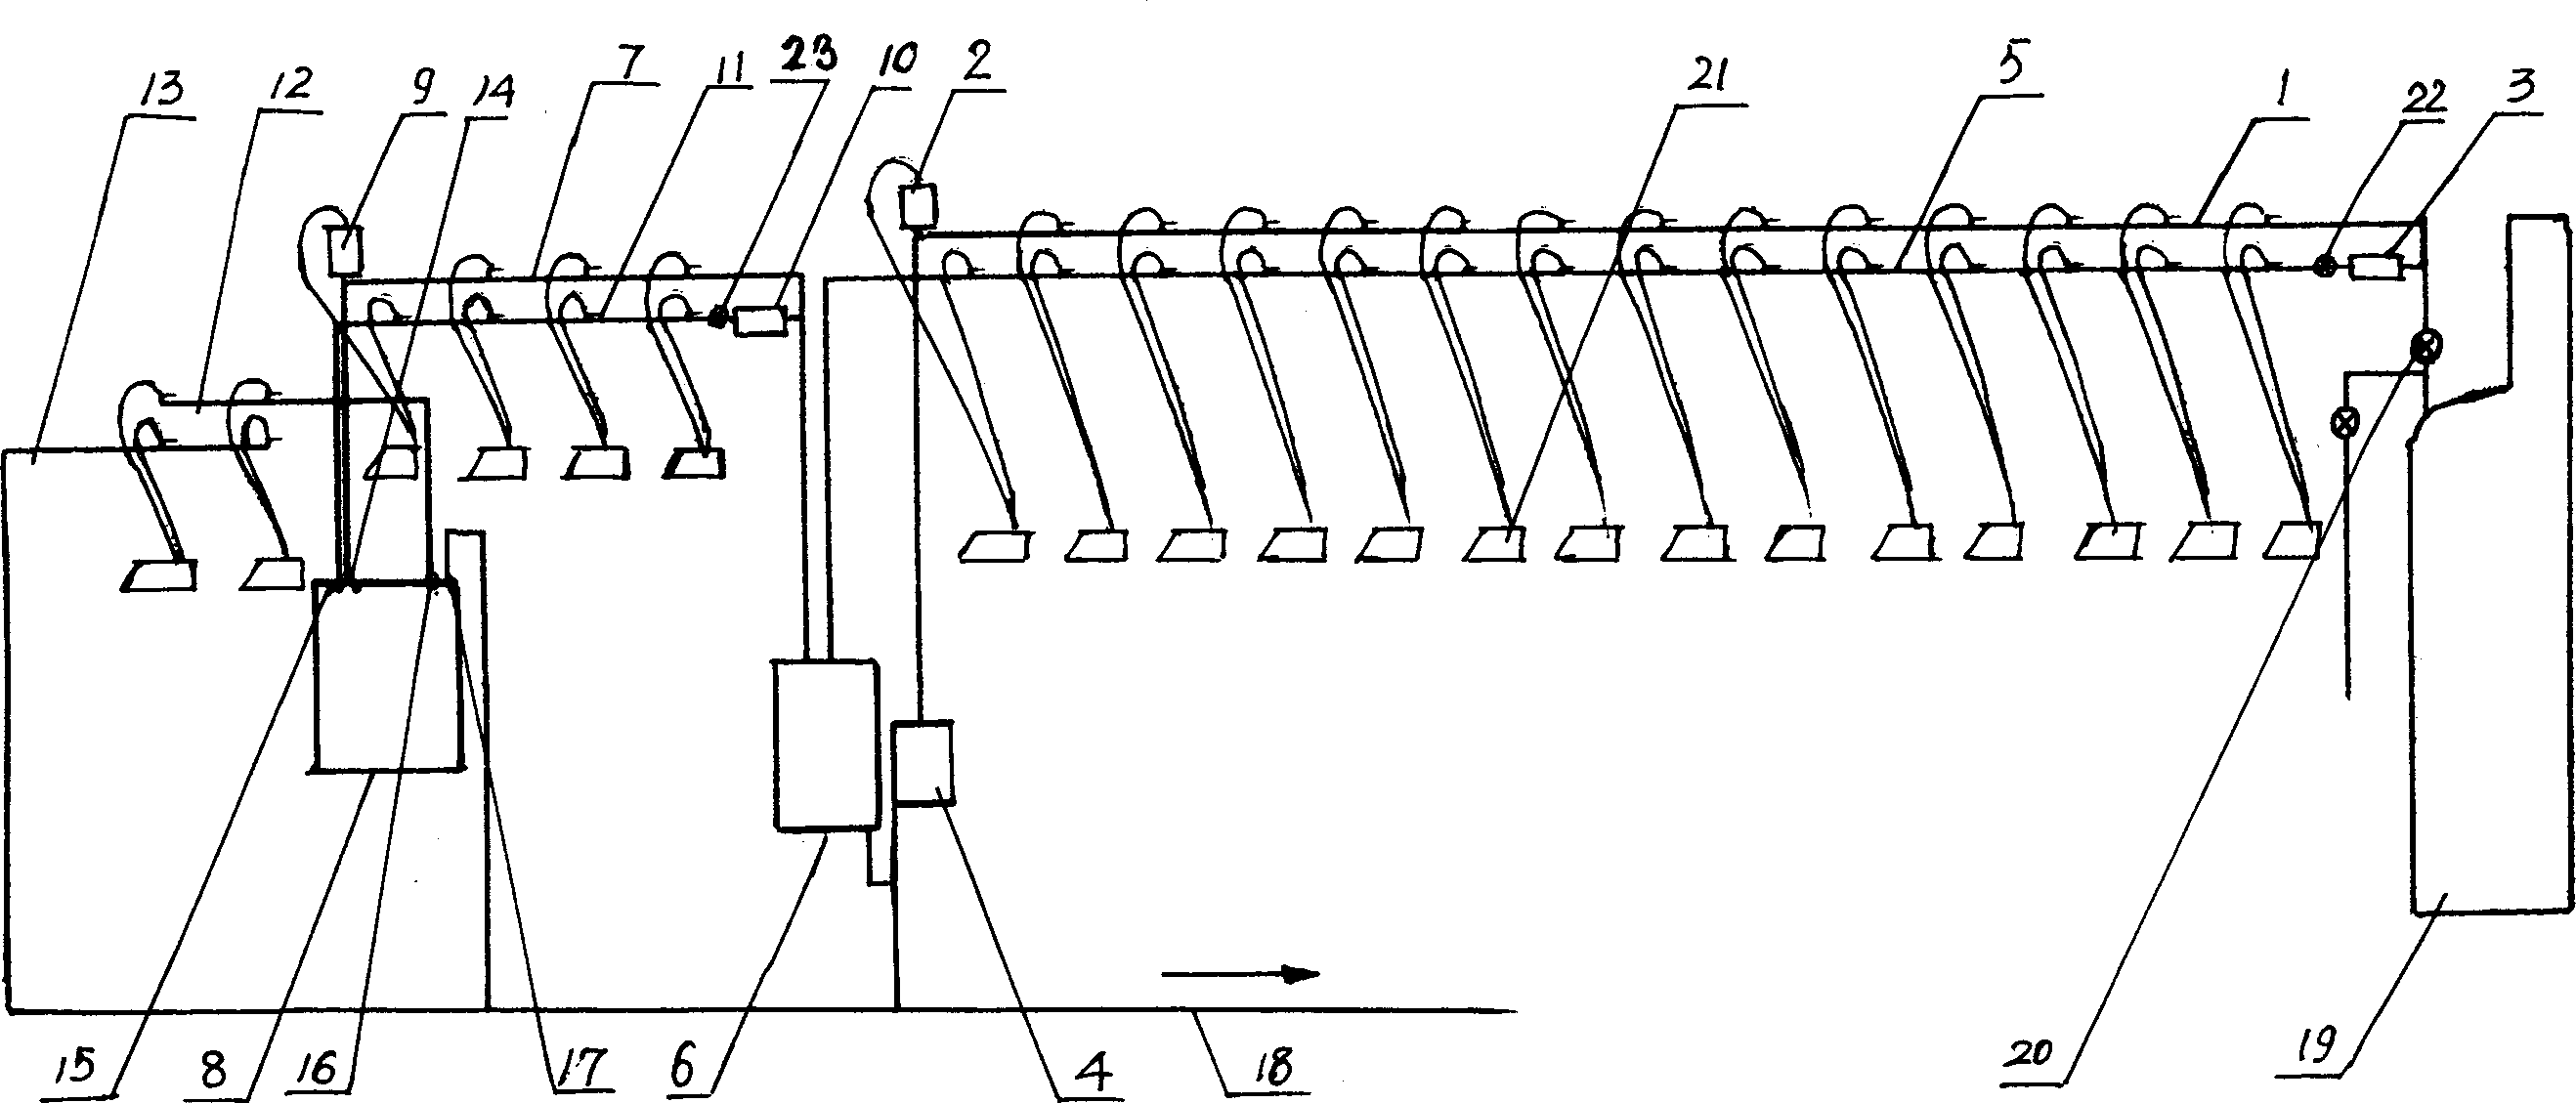 Steam-vapour three-purpose pipe distributing method of iron